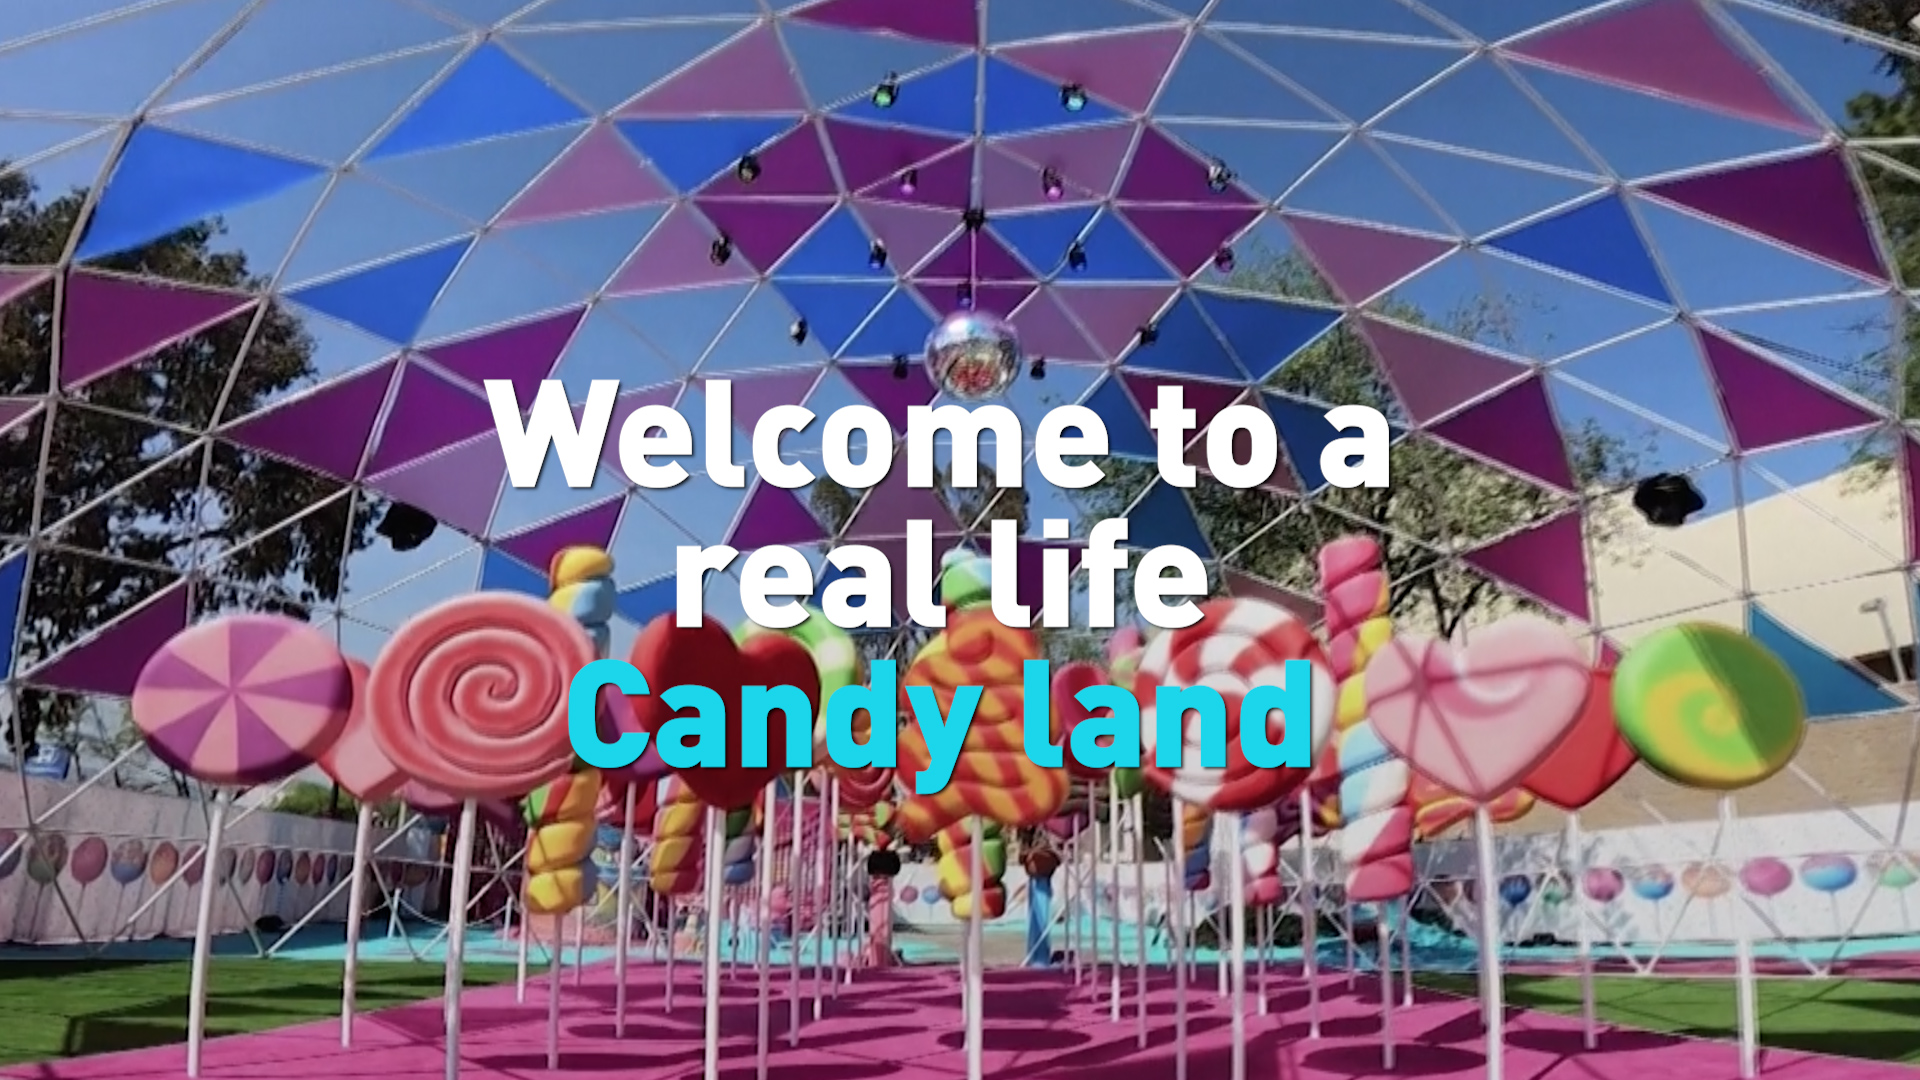 Candy themed amusement park